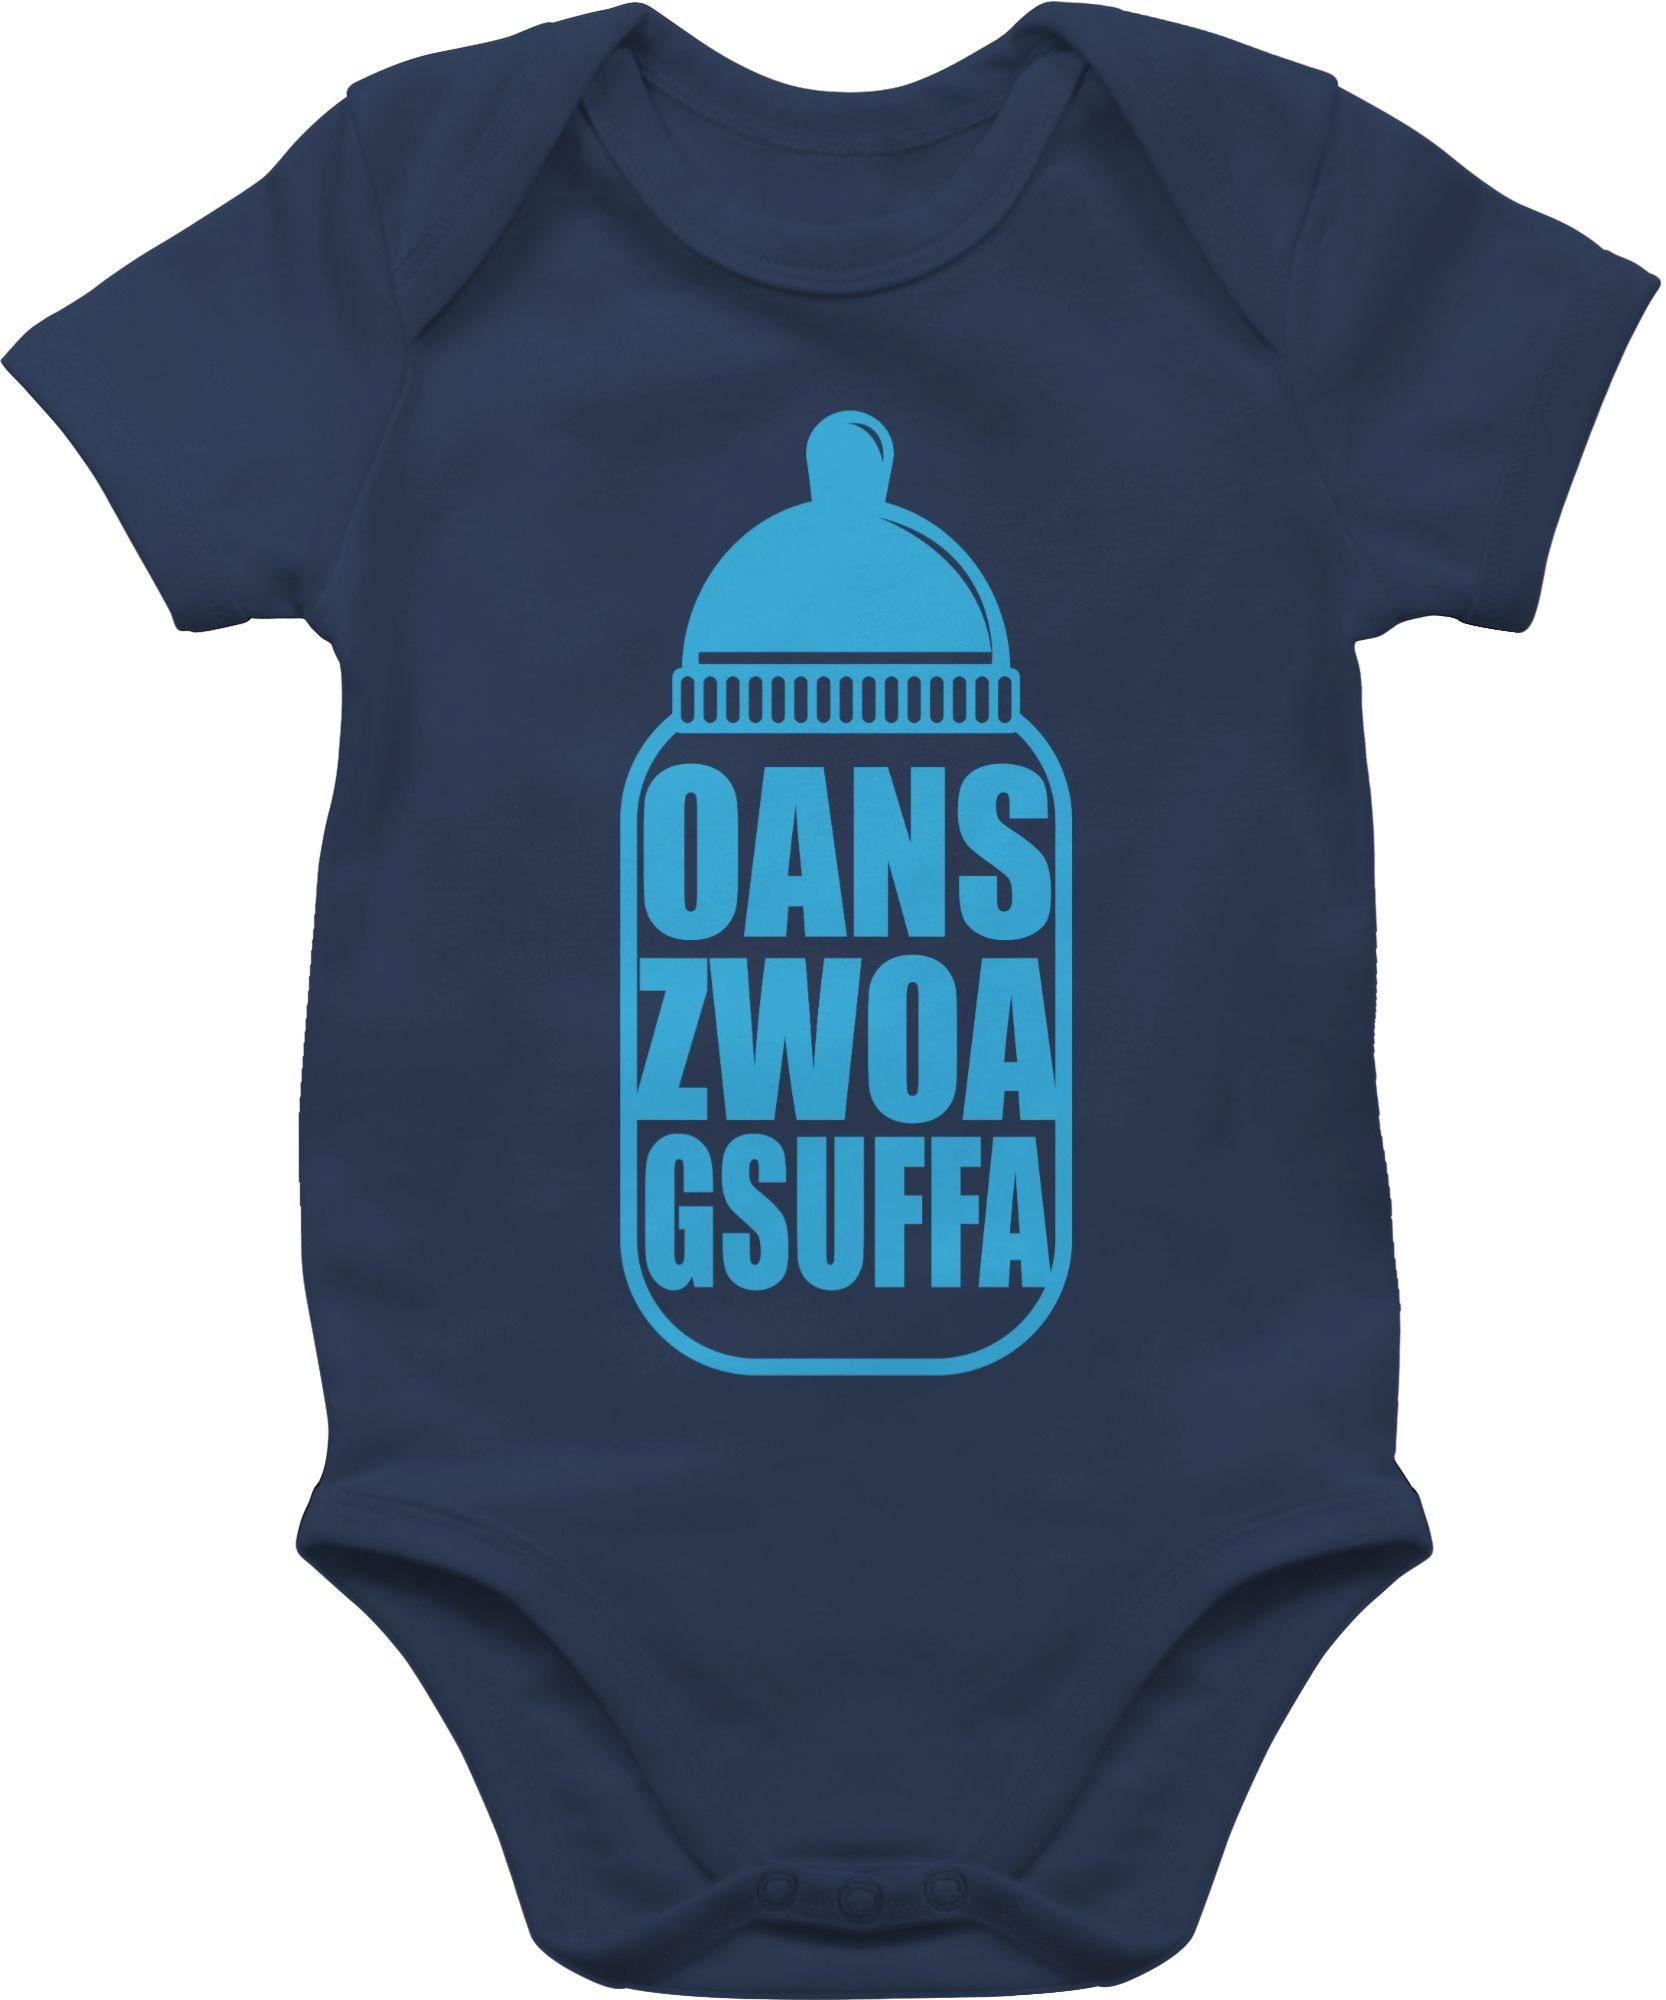 Shirtracer Shirtbody Babyflasche Oans Zwoa Gsuffa blau Mode für Oktoberfest Baby Outfit 2 Navy Blau